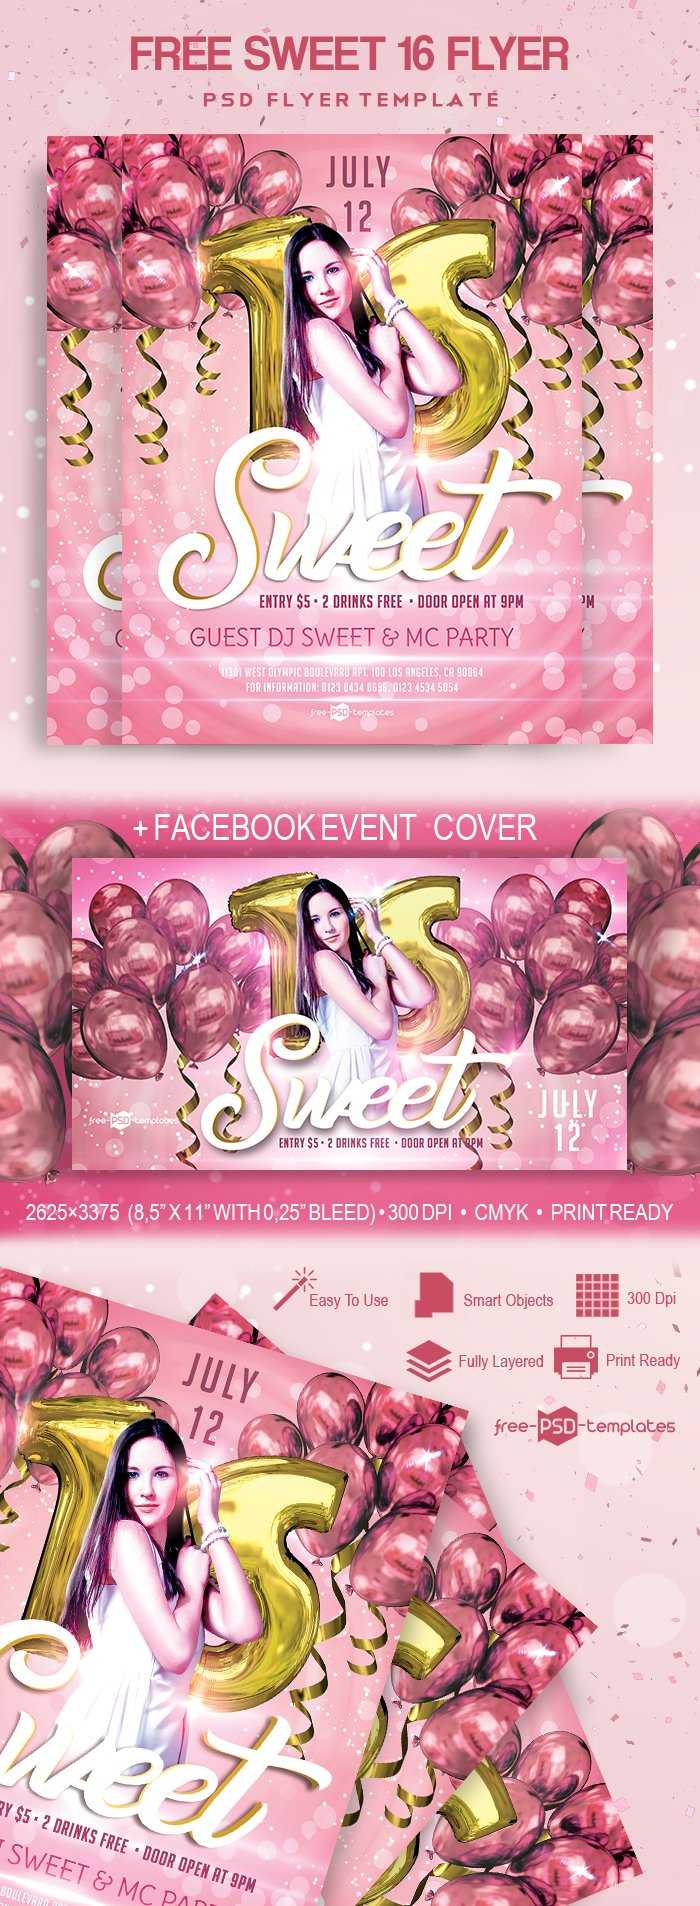 Free Sweet 16 Flyer In Psd | Free Psd Templates Regarding Sweet 16 Banner Template